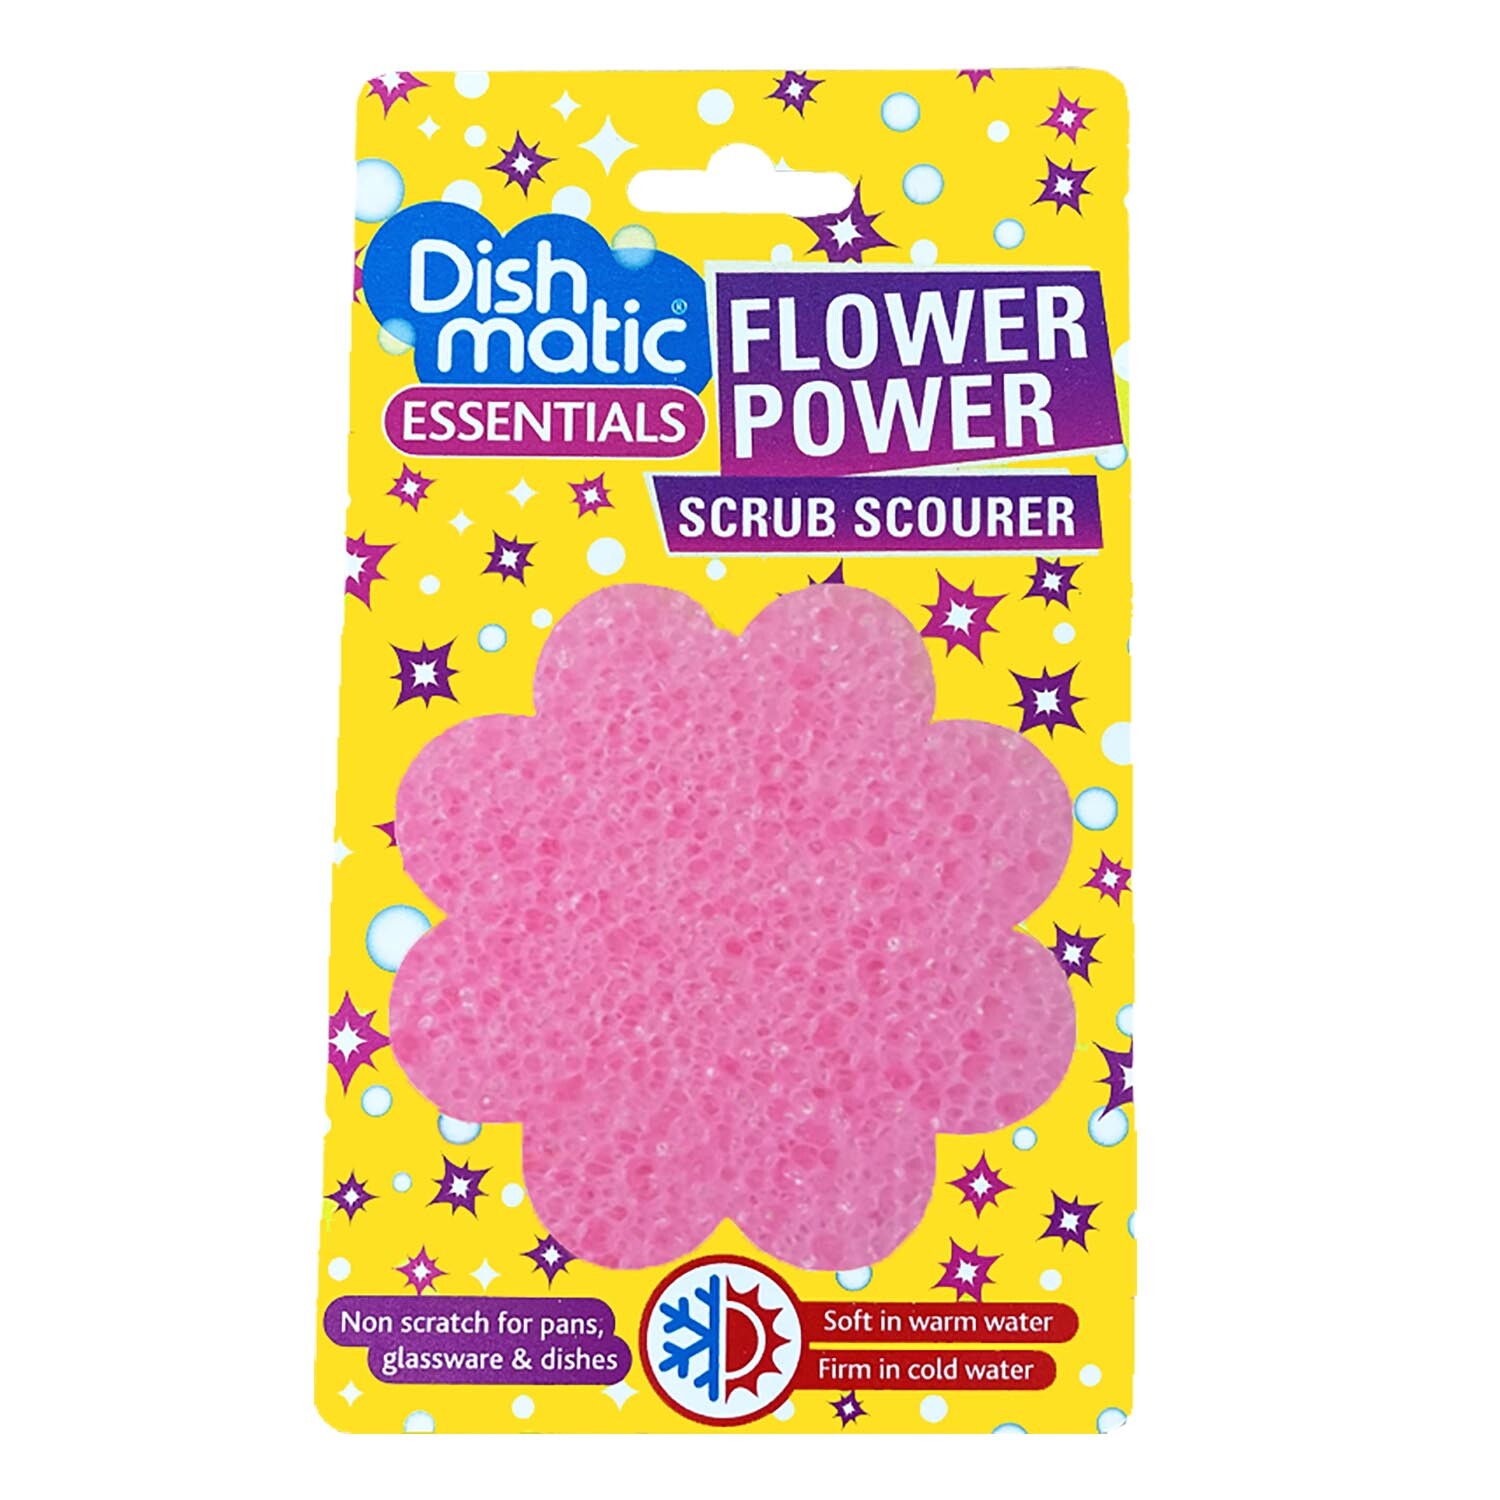 Dishmatic Essentials Flower Power Scrub Image 2